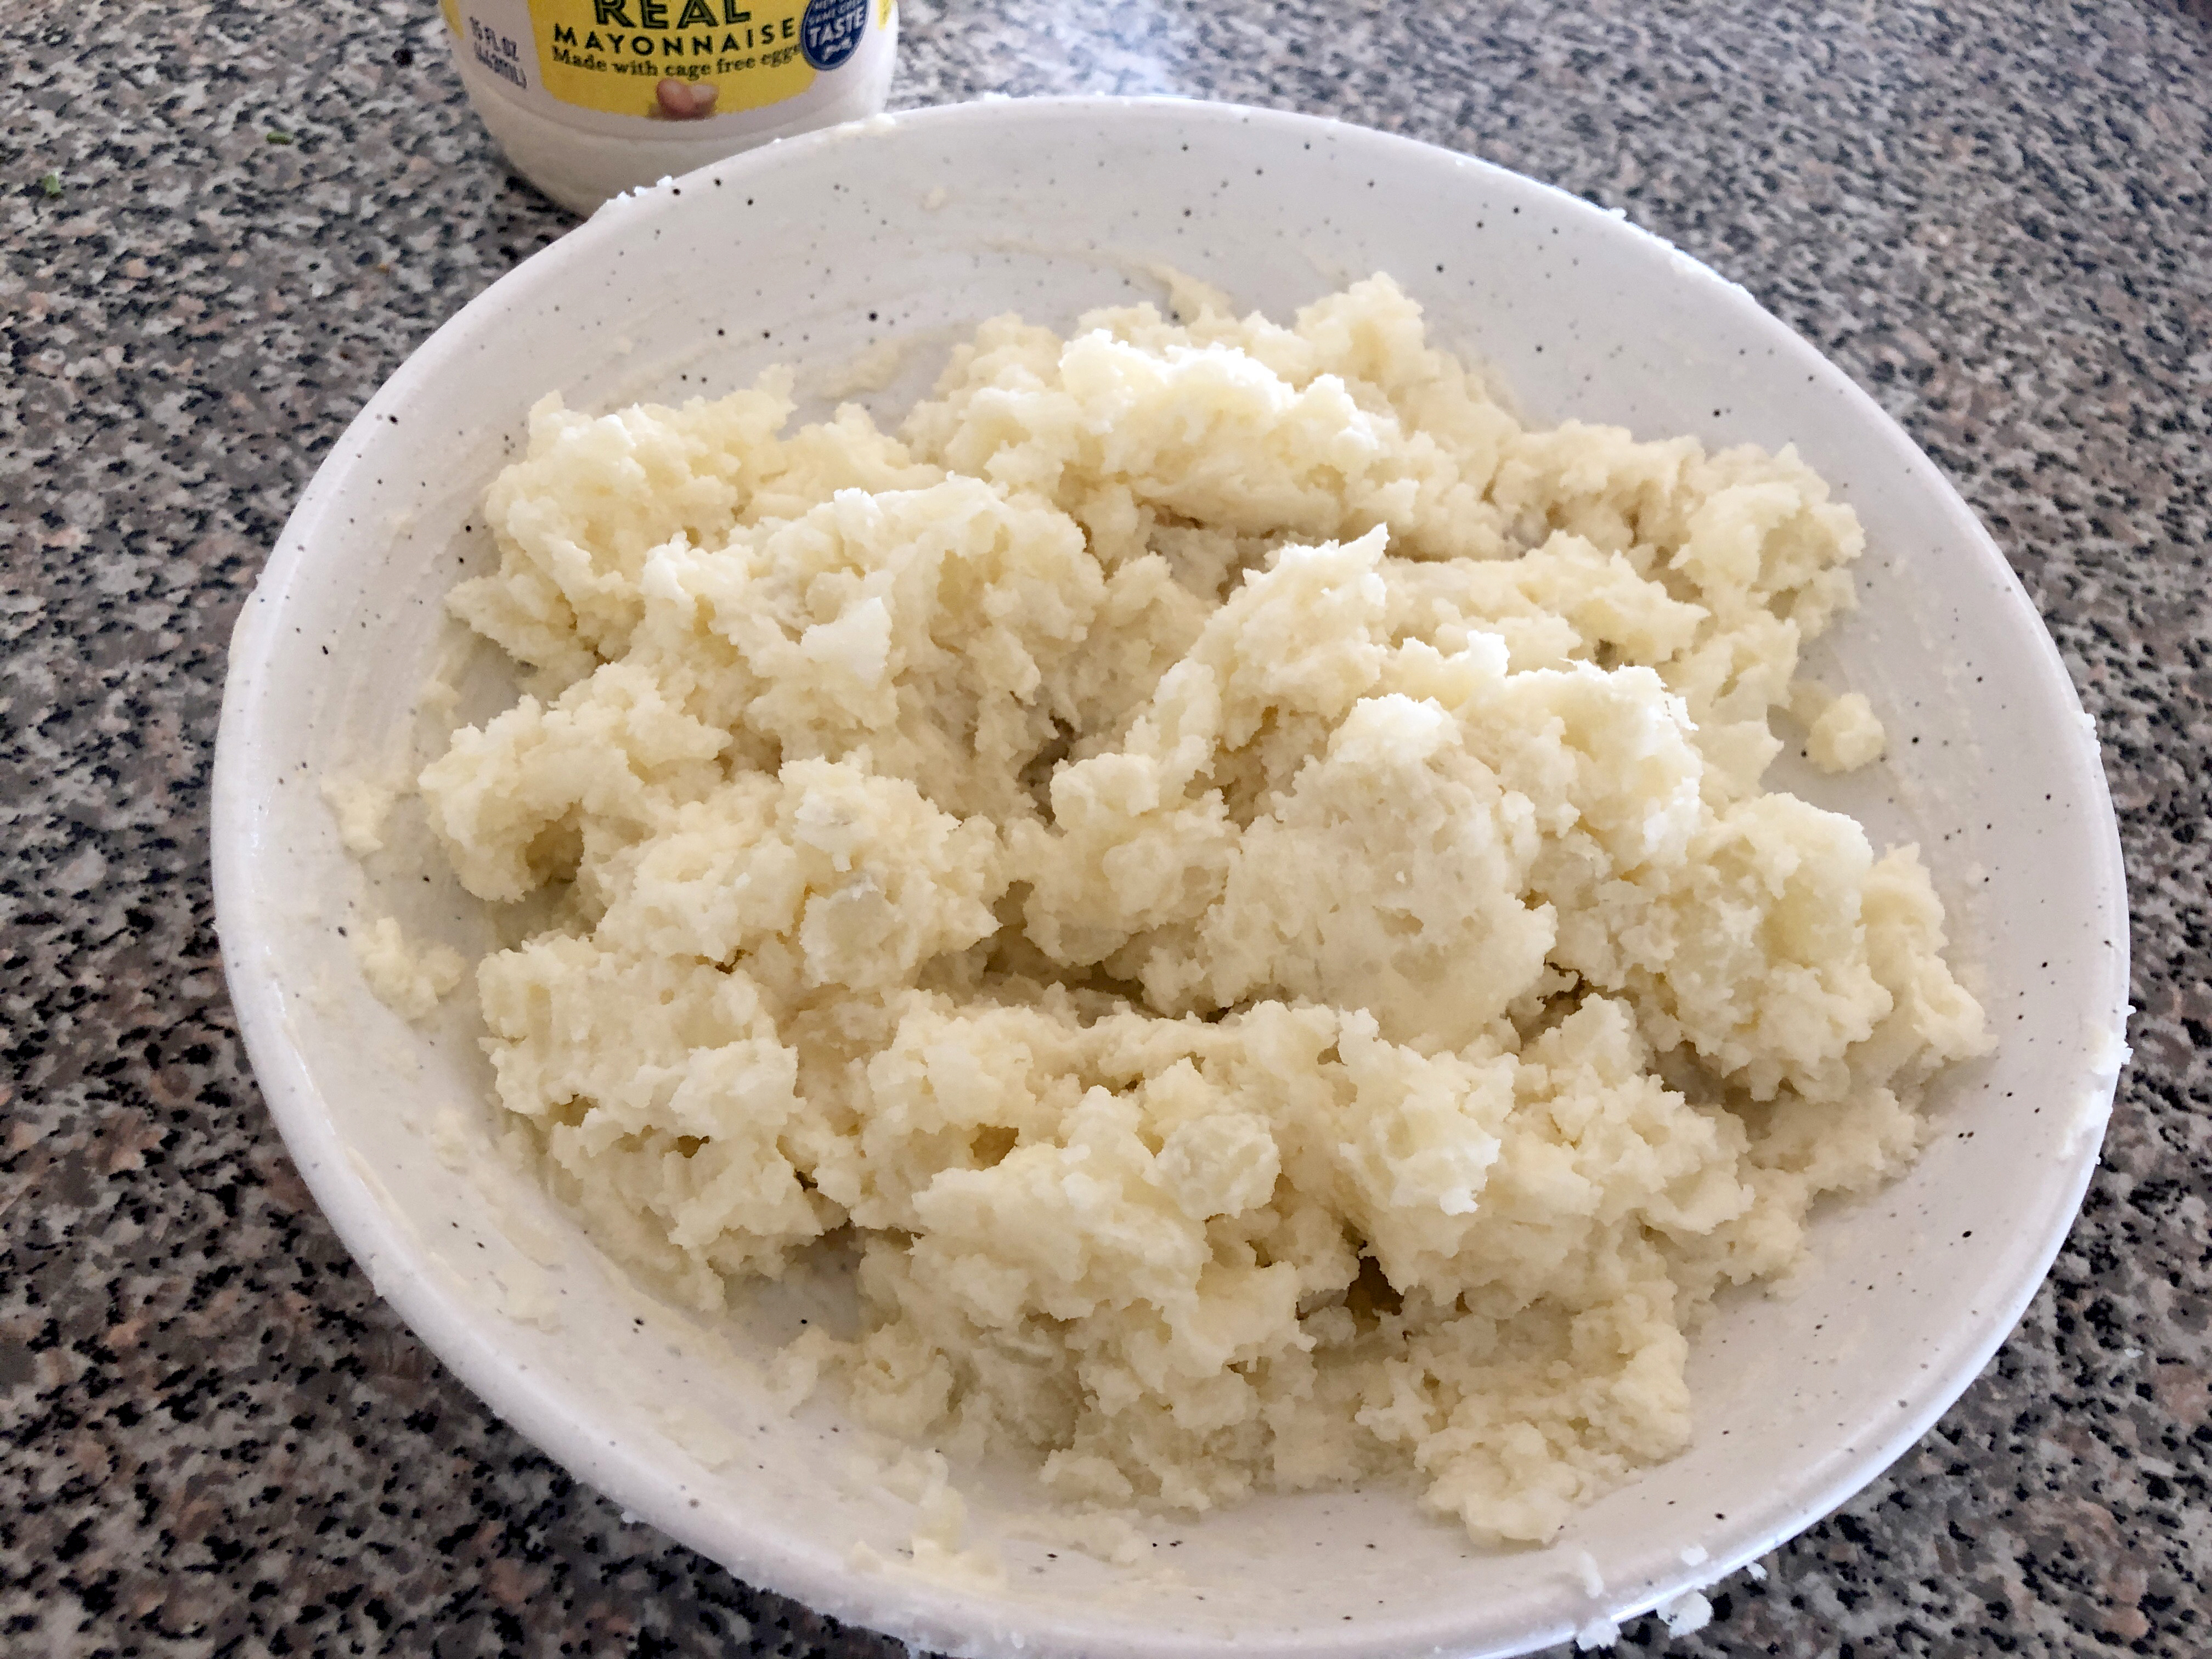 Mashed potatoes with mayo